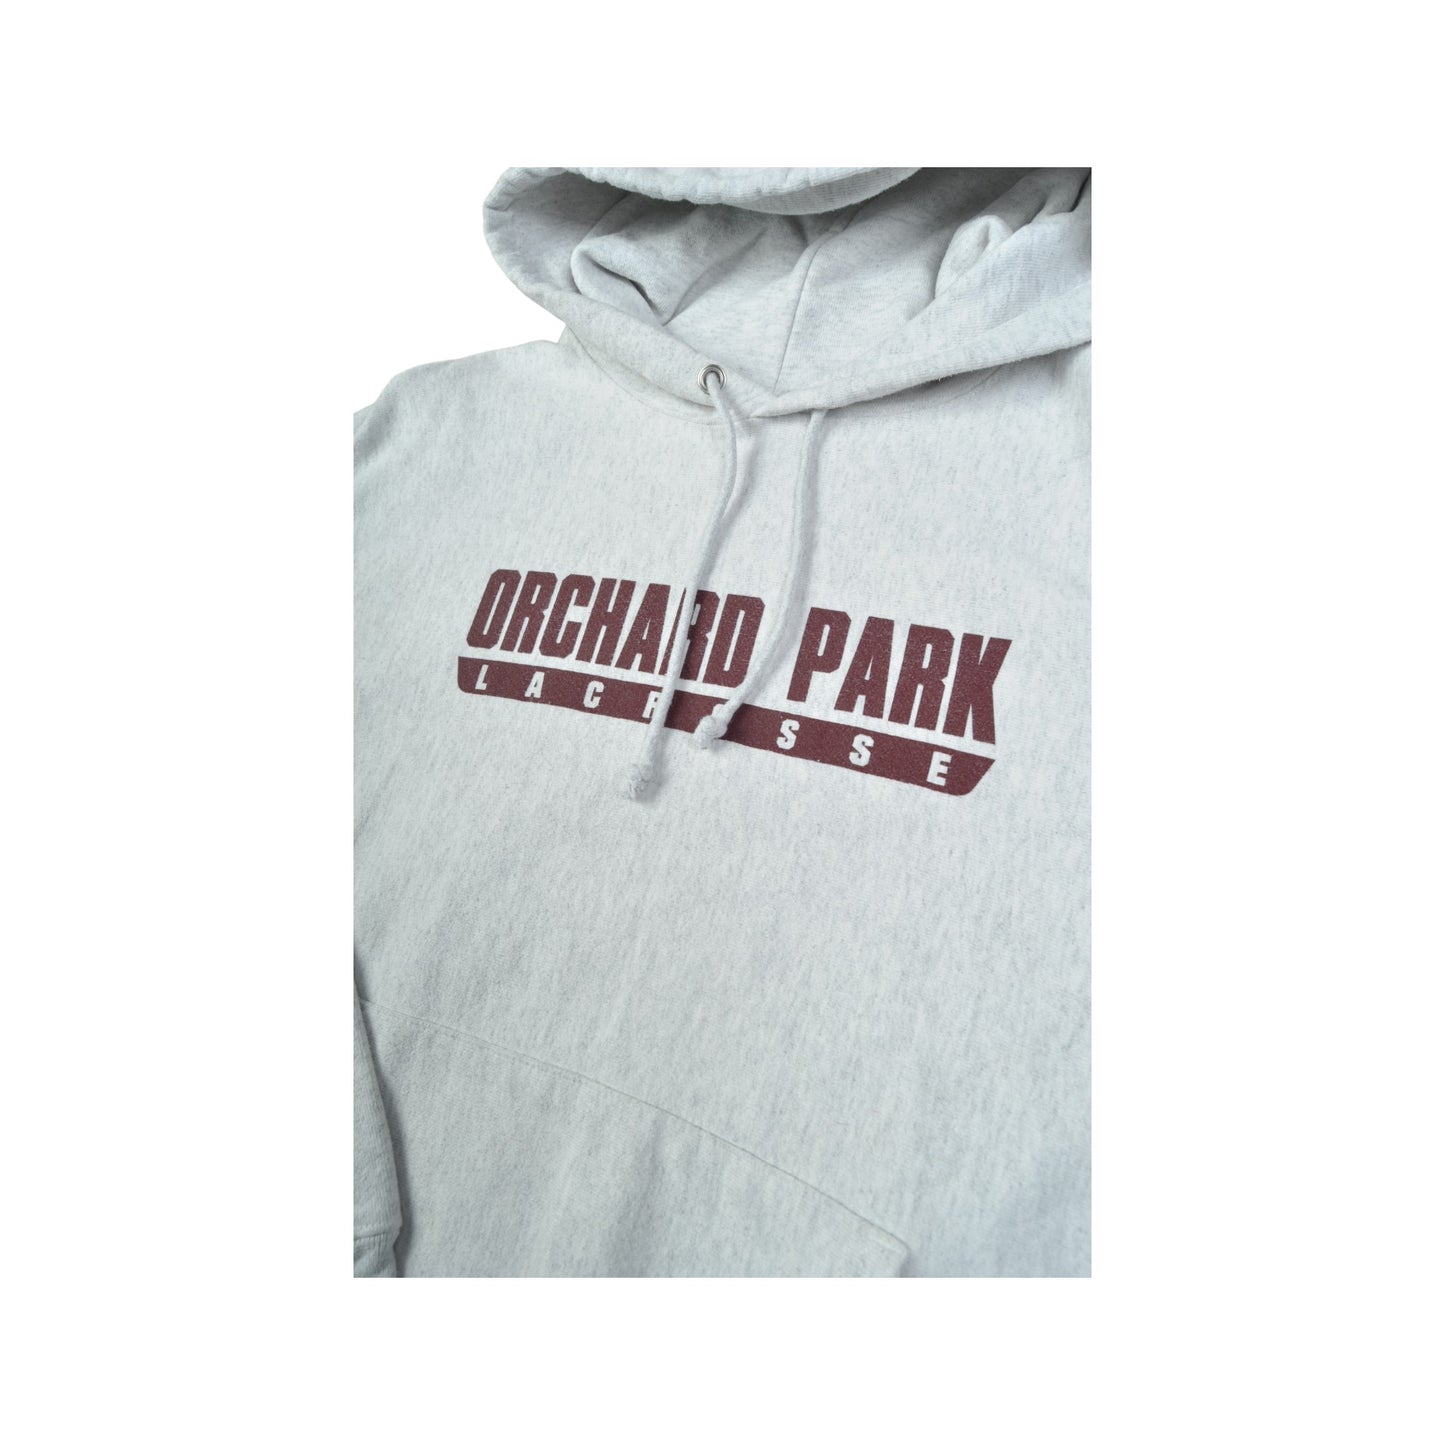 Vintage Champion Orchard Park Lacrosse Hoodie Sweater Grey Large